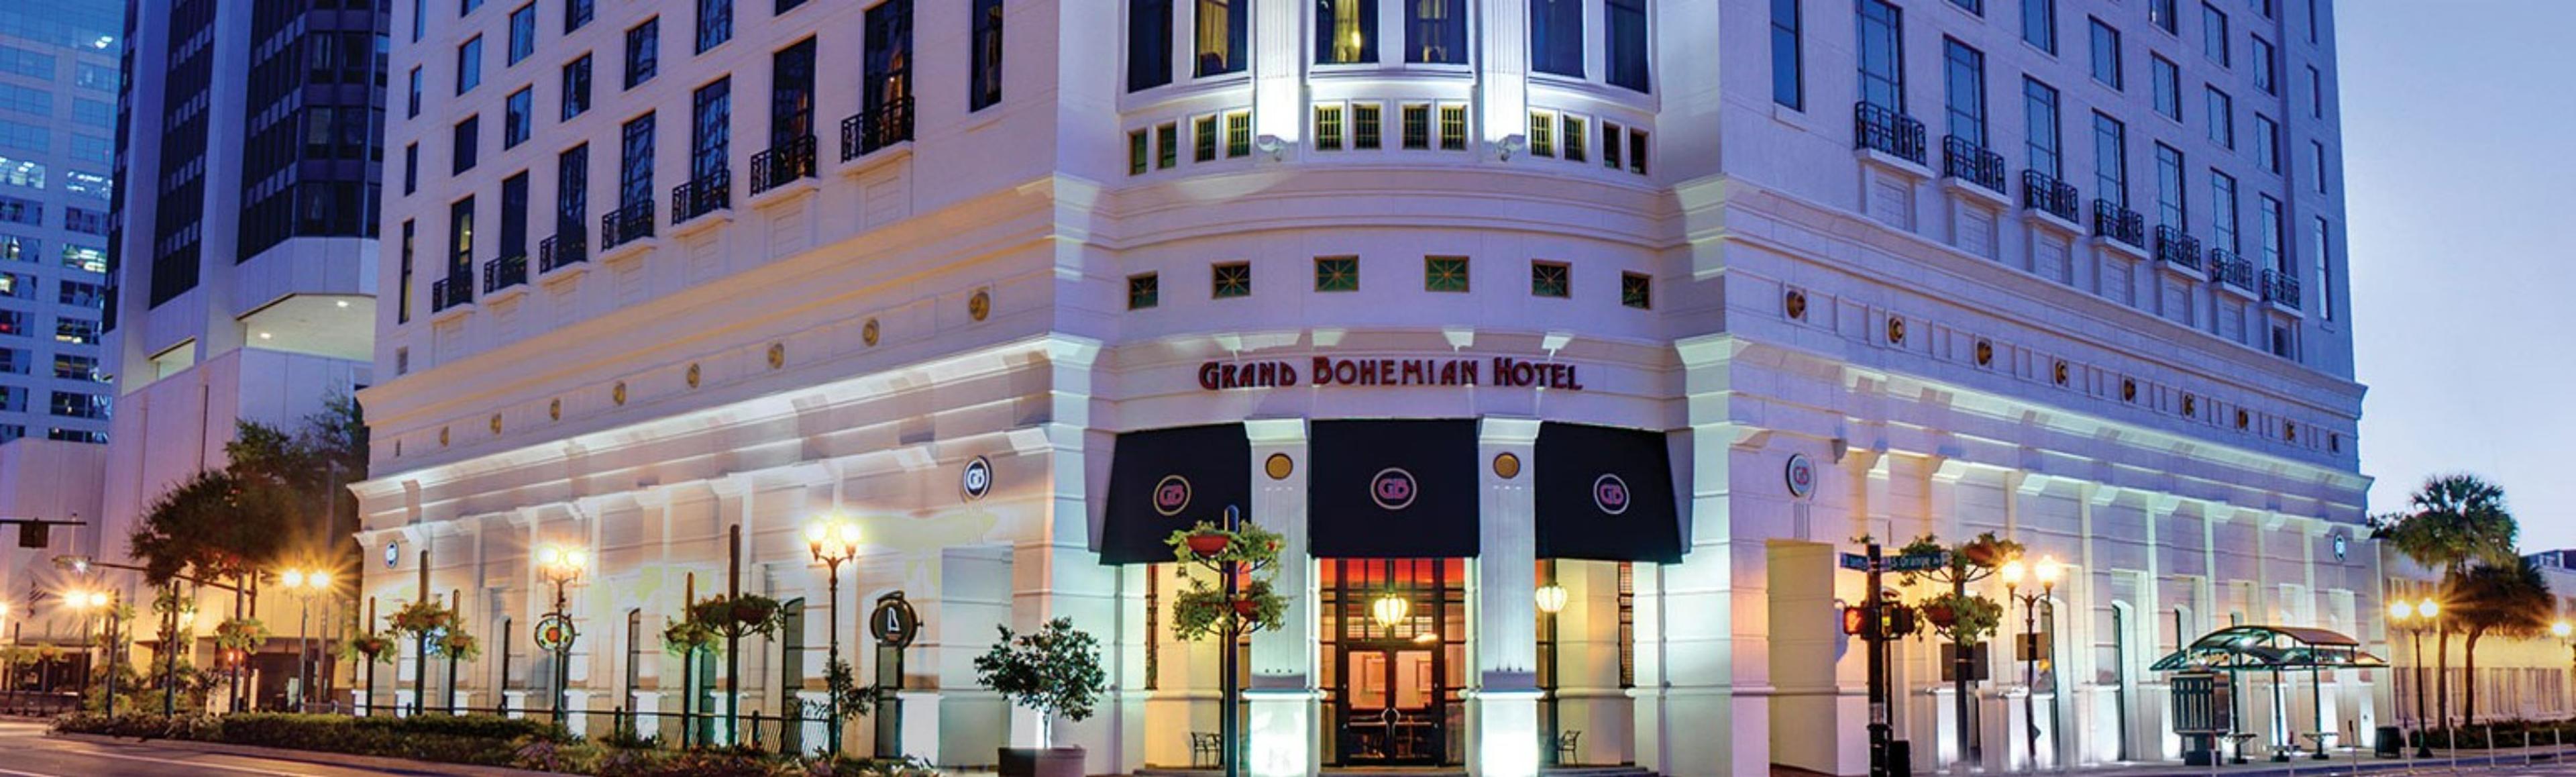 Grand Bohemian Hotel Orlando - Orlando, FL